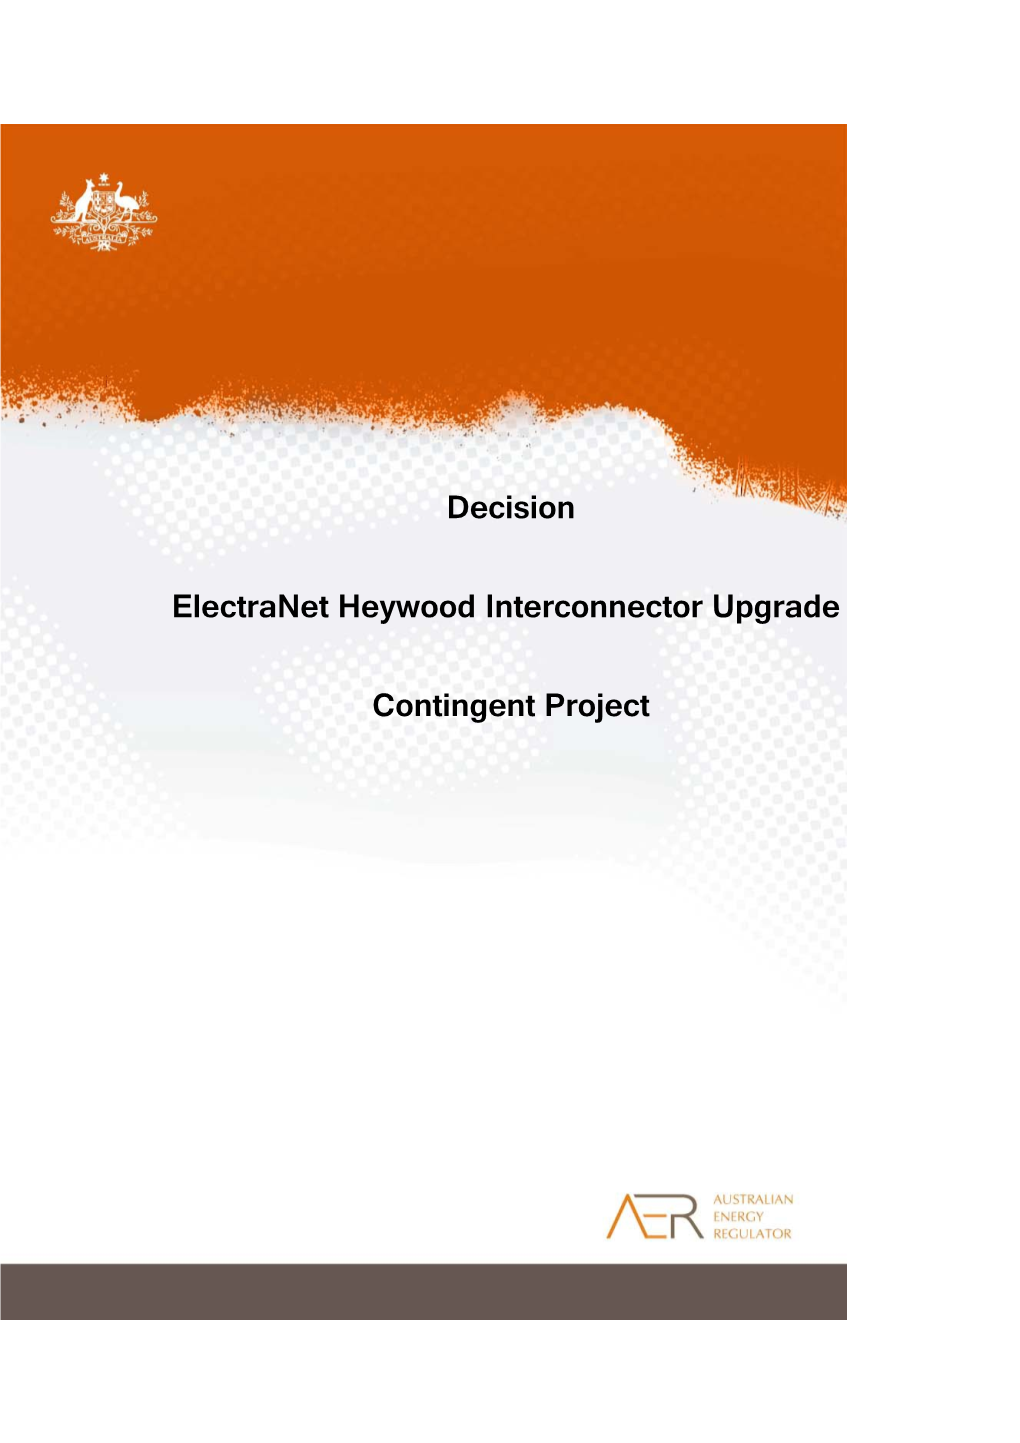 Electranet Heywood Interconnector Upgrade